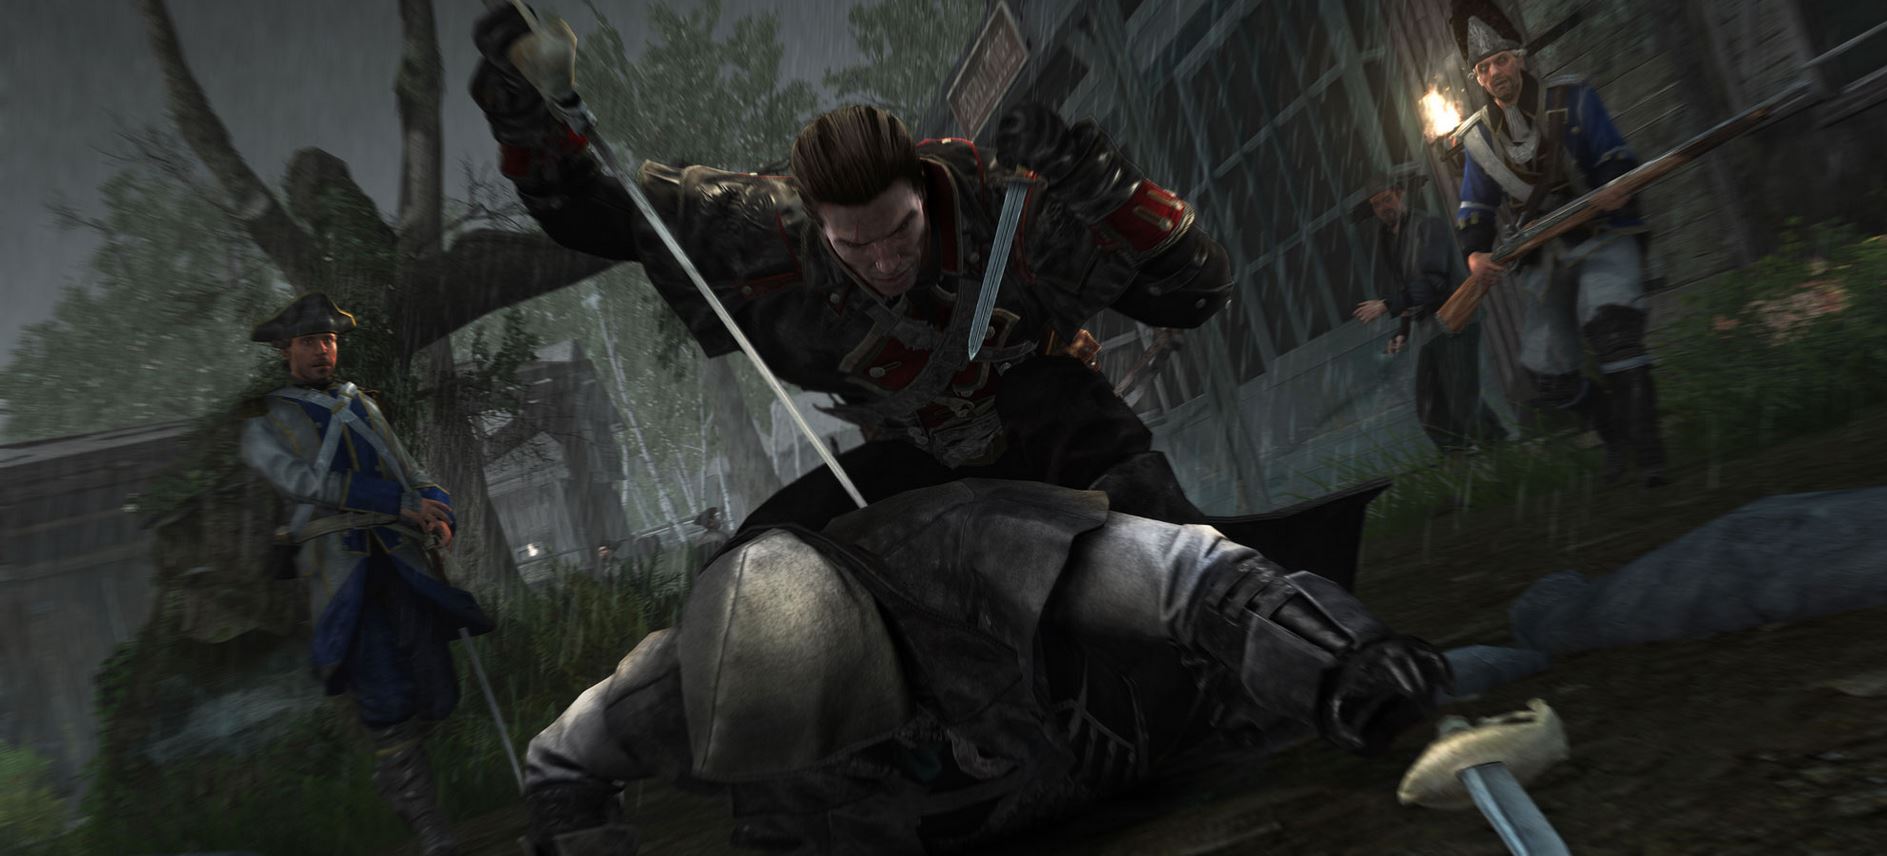 Assassin's Creed Rogue Preorder Bonuses - GameSpot